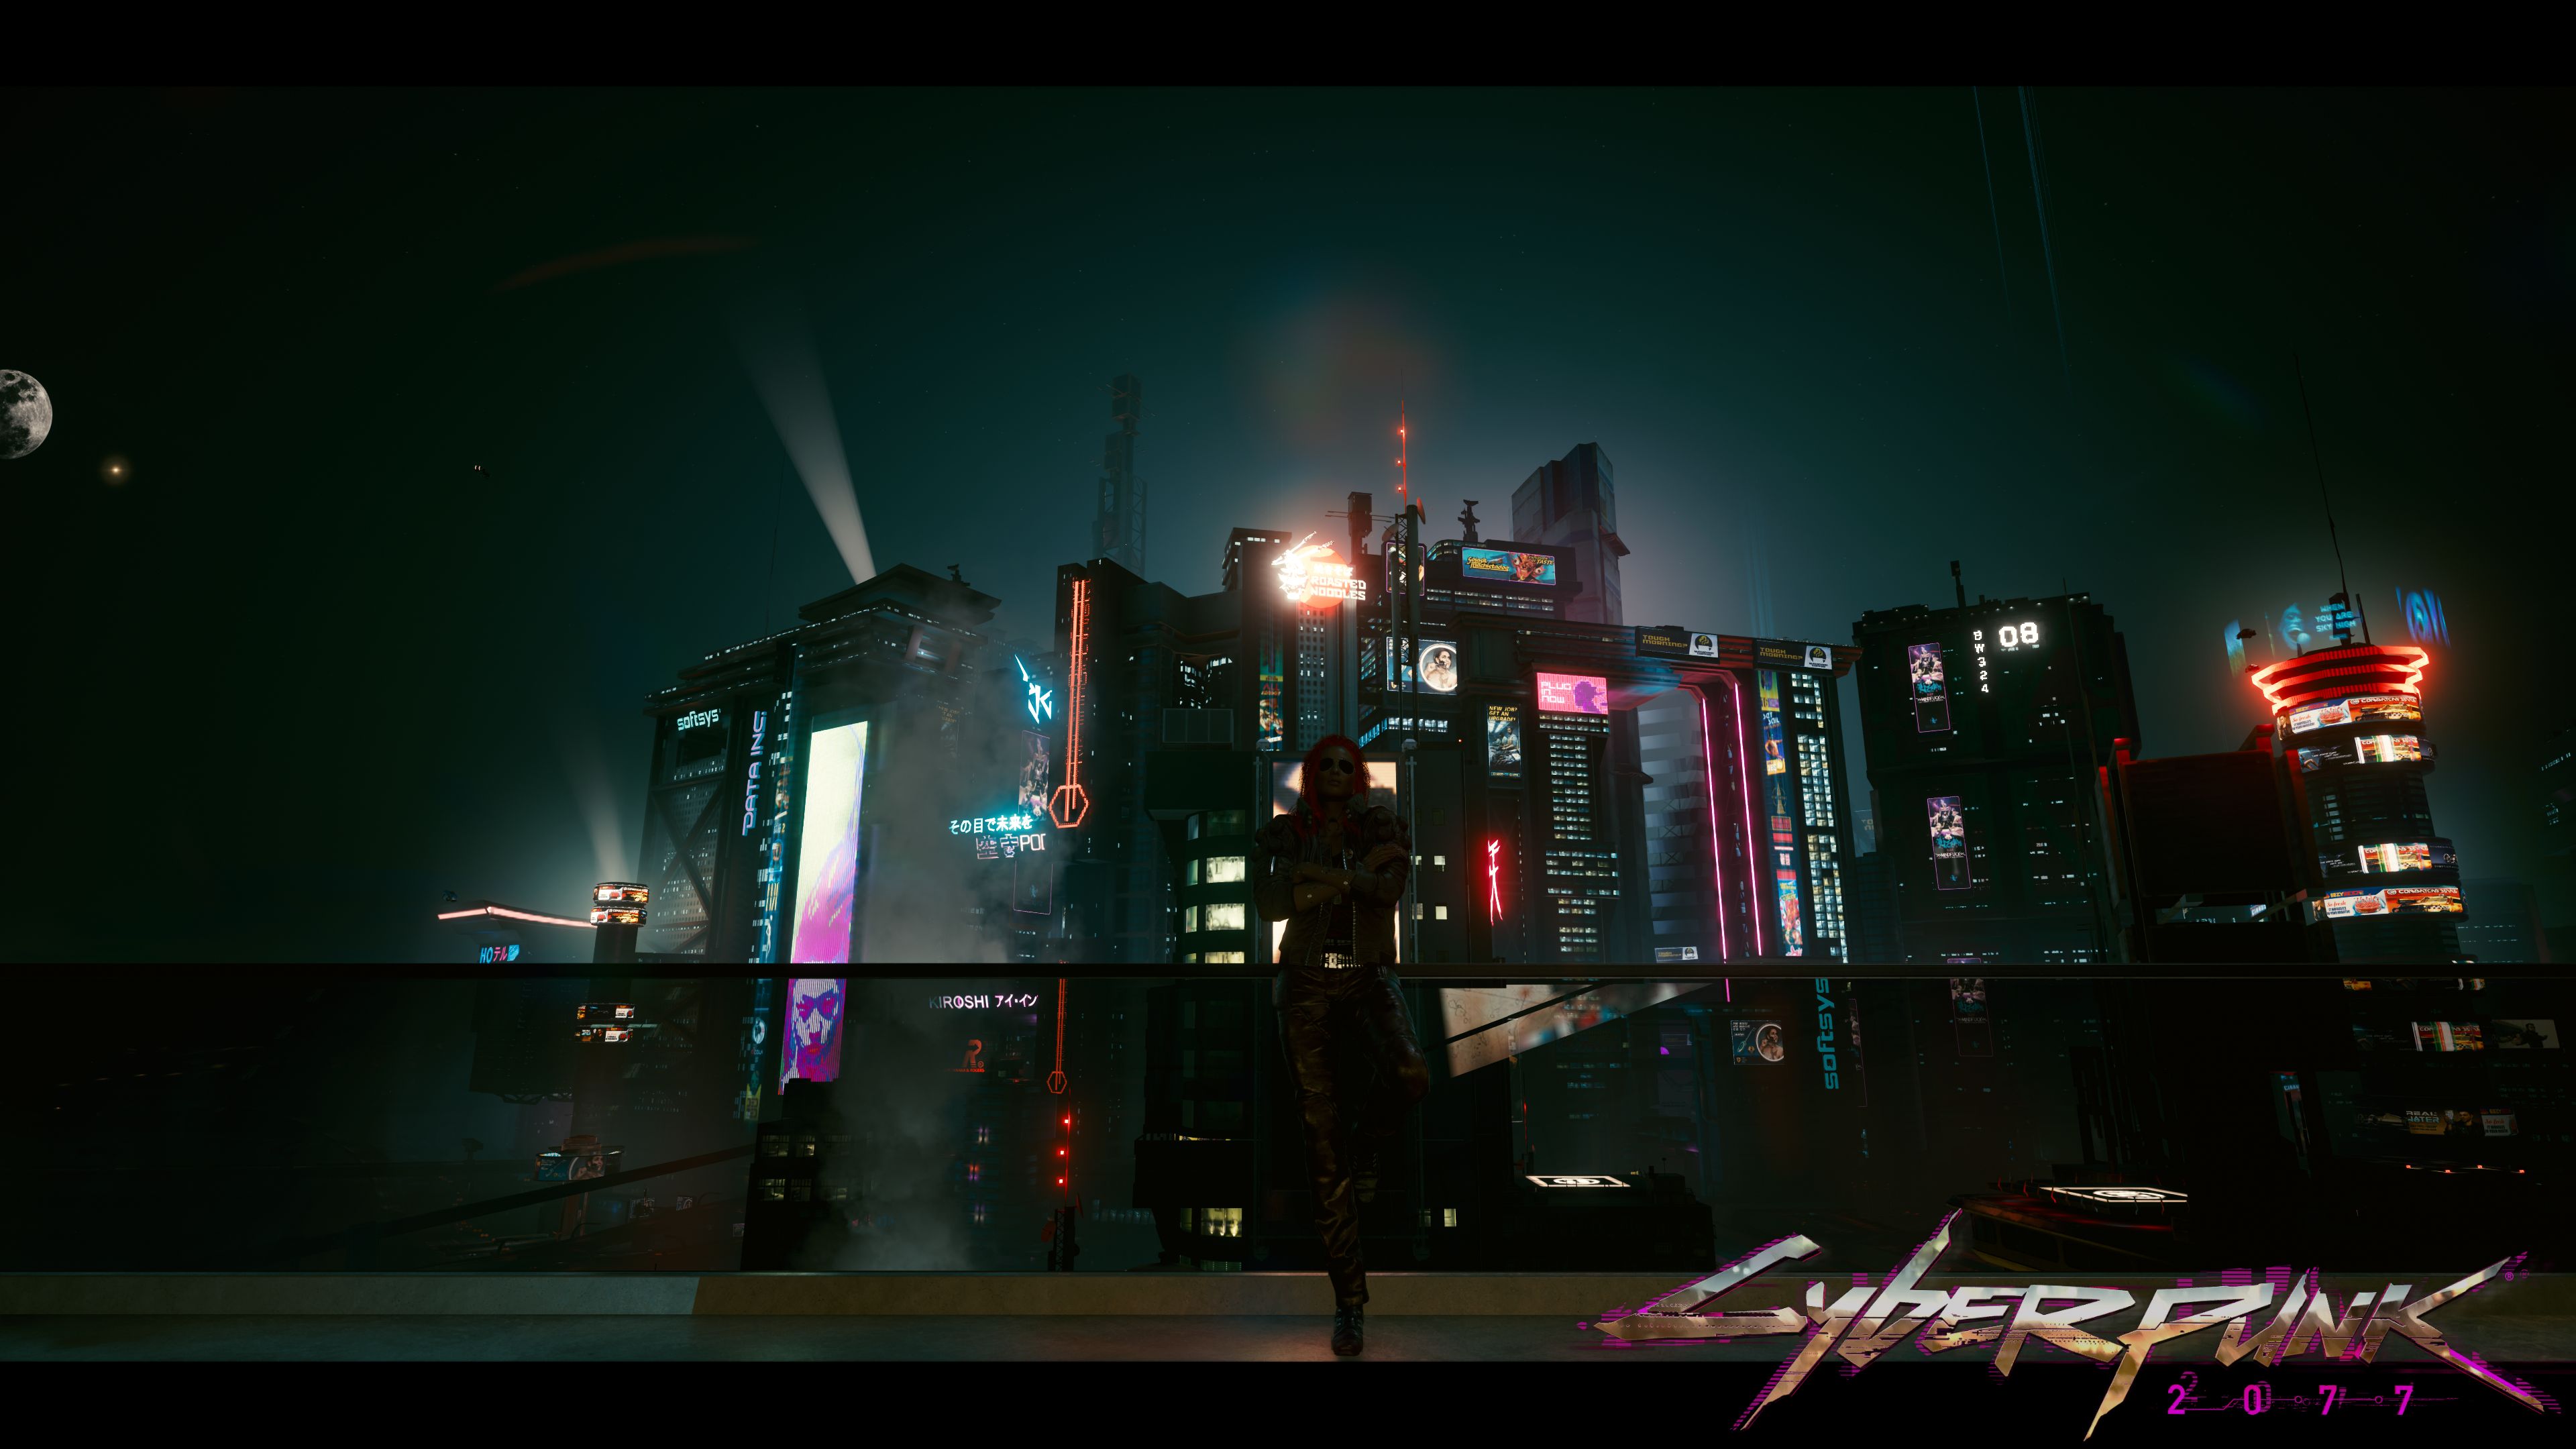 Download wallpaper: Cyberpunk 2077 city view 1366x768